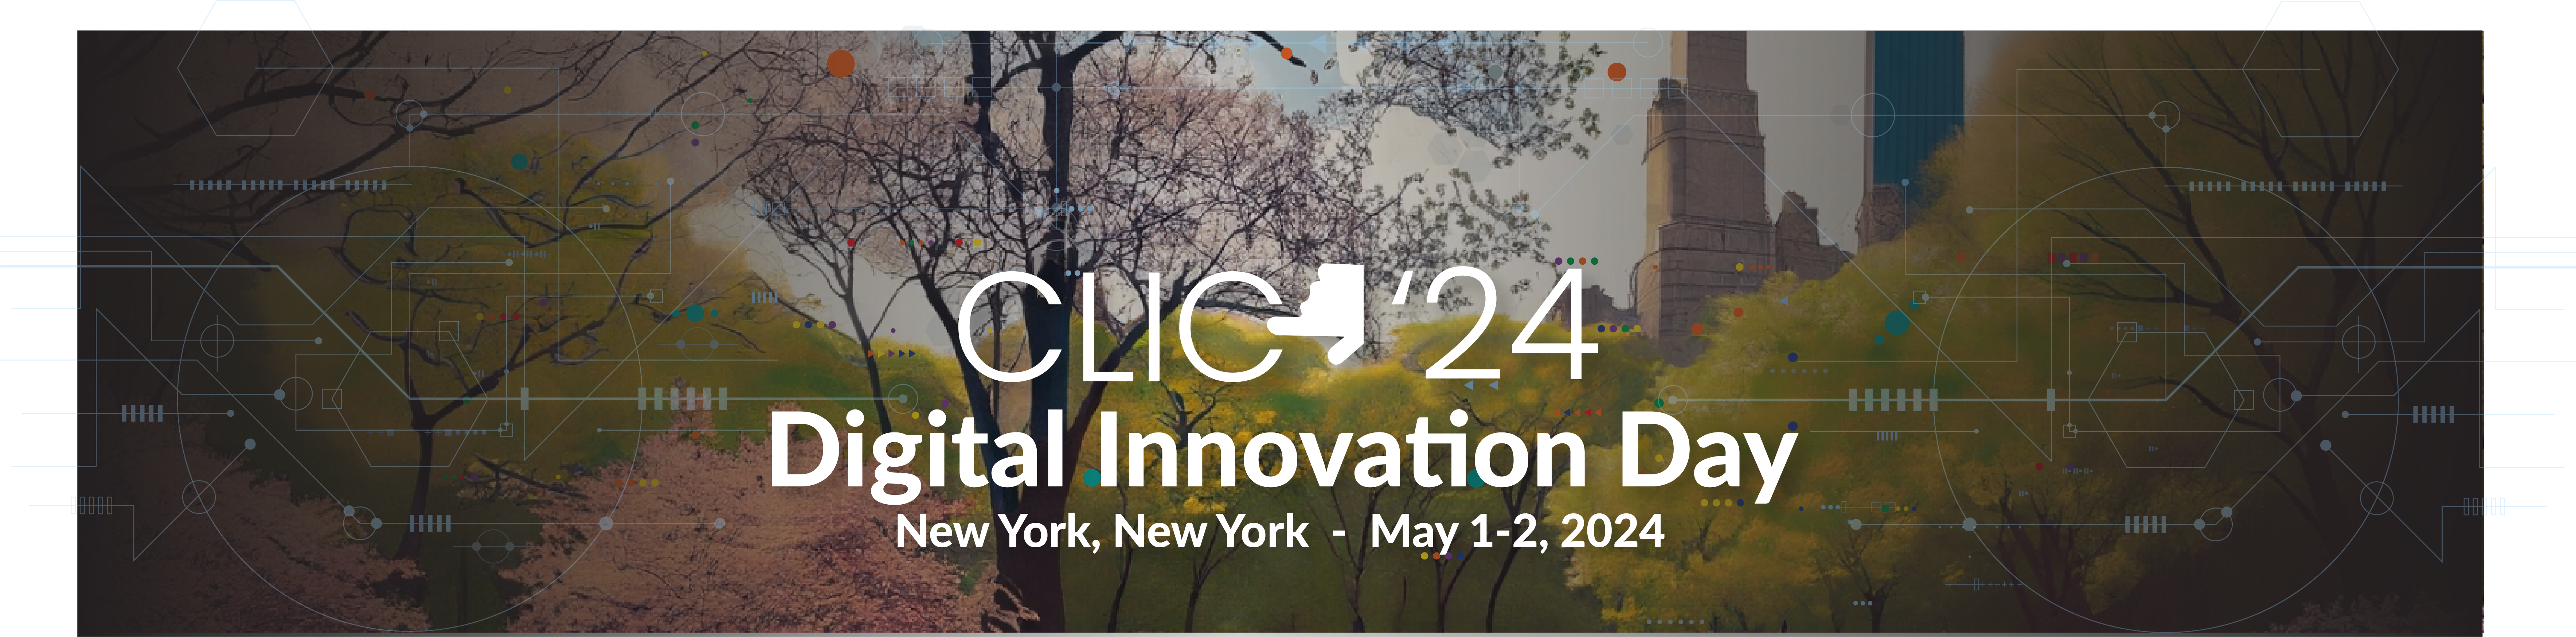 CLIC '24 digital innovation day graphic